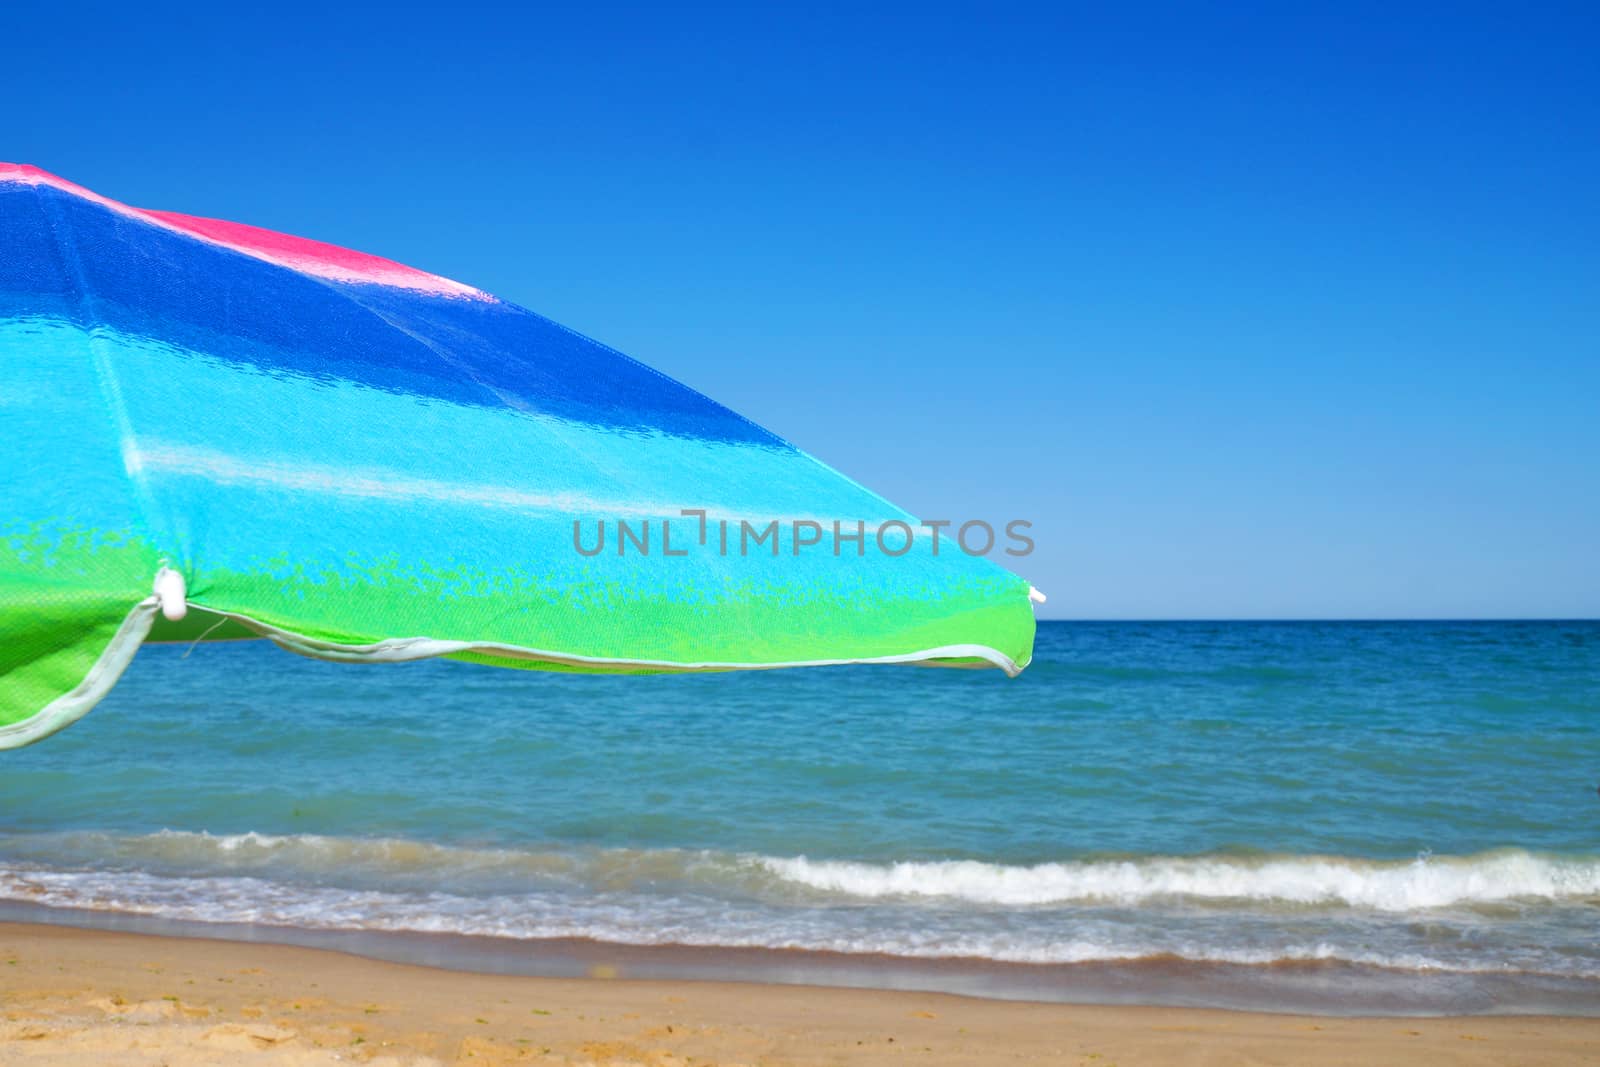 beach umbrella against the sea horizon and clear sky, copy space. by Annado